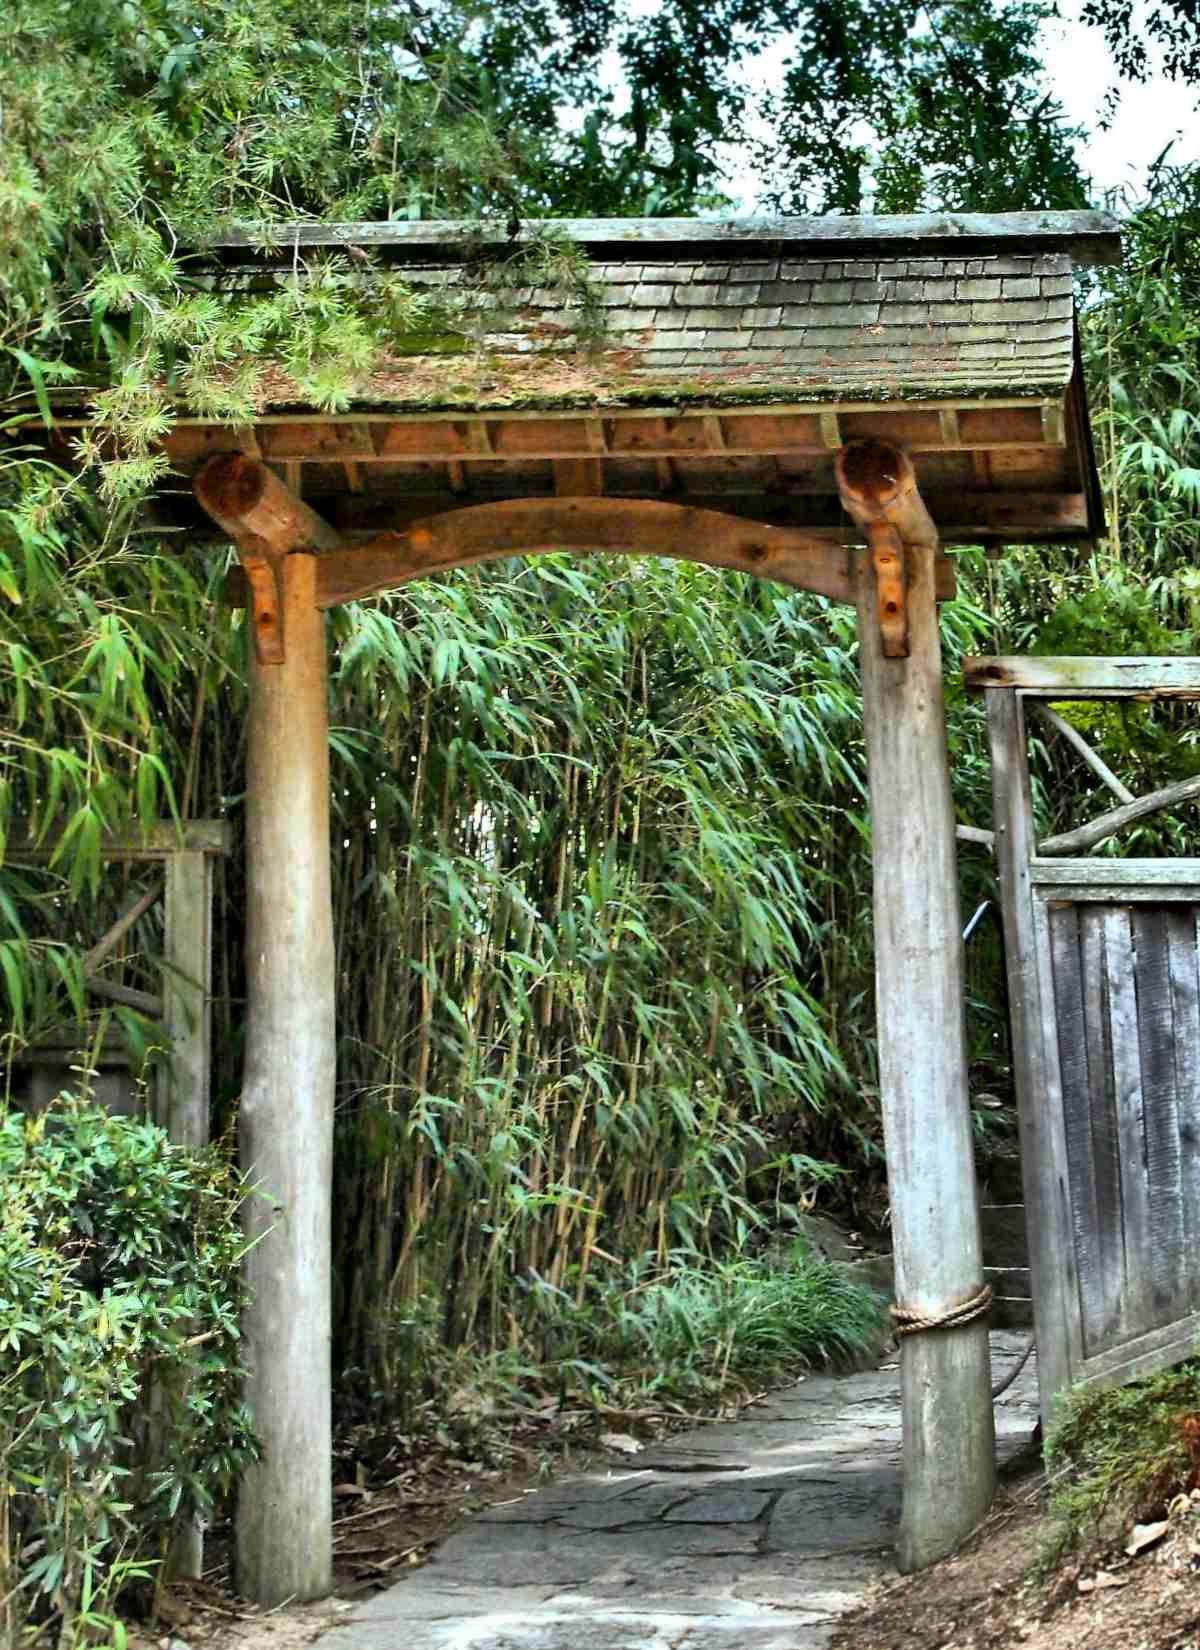 Archway to a meditative garden